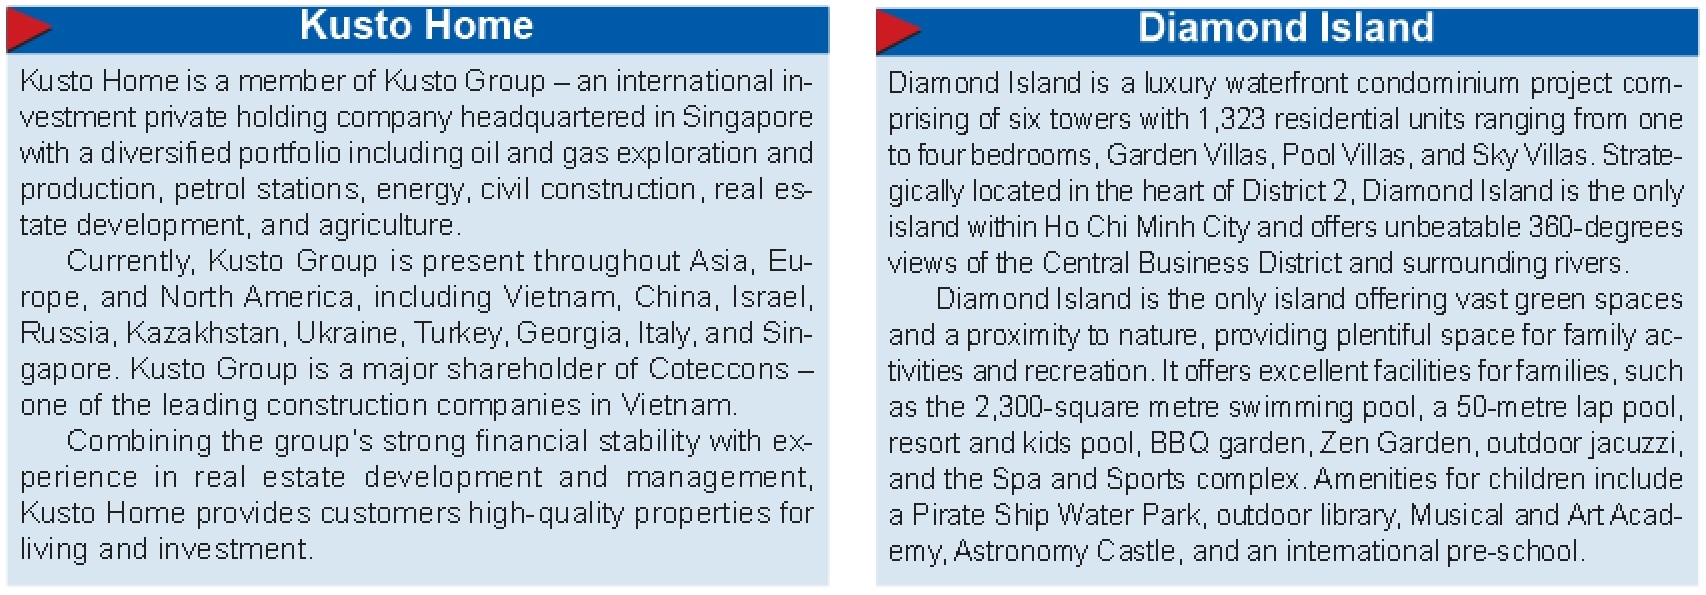 kustos prospects after diamond island triumph